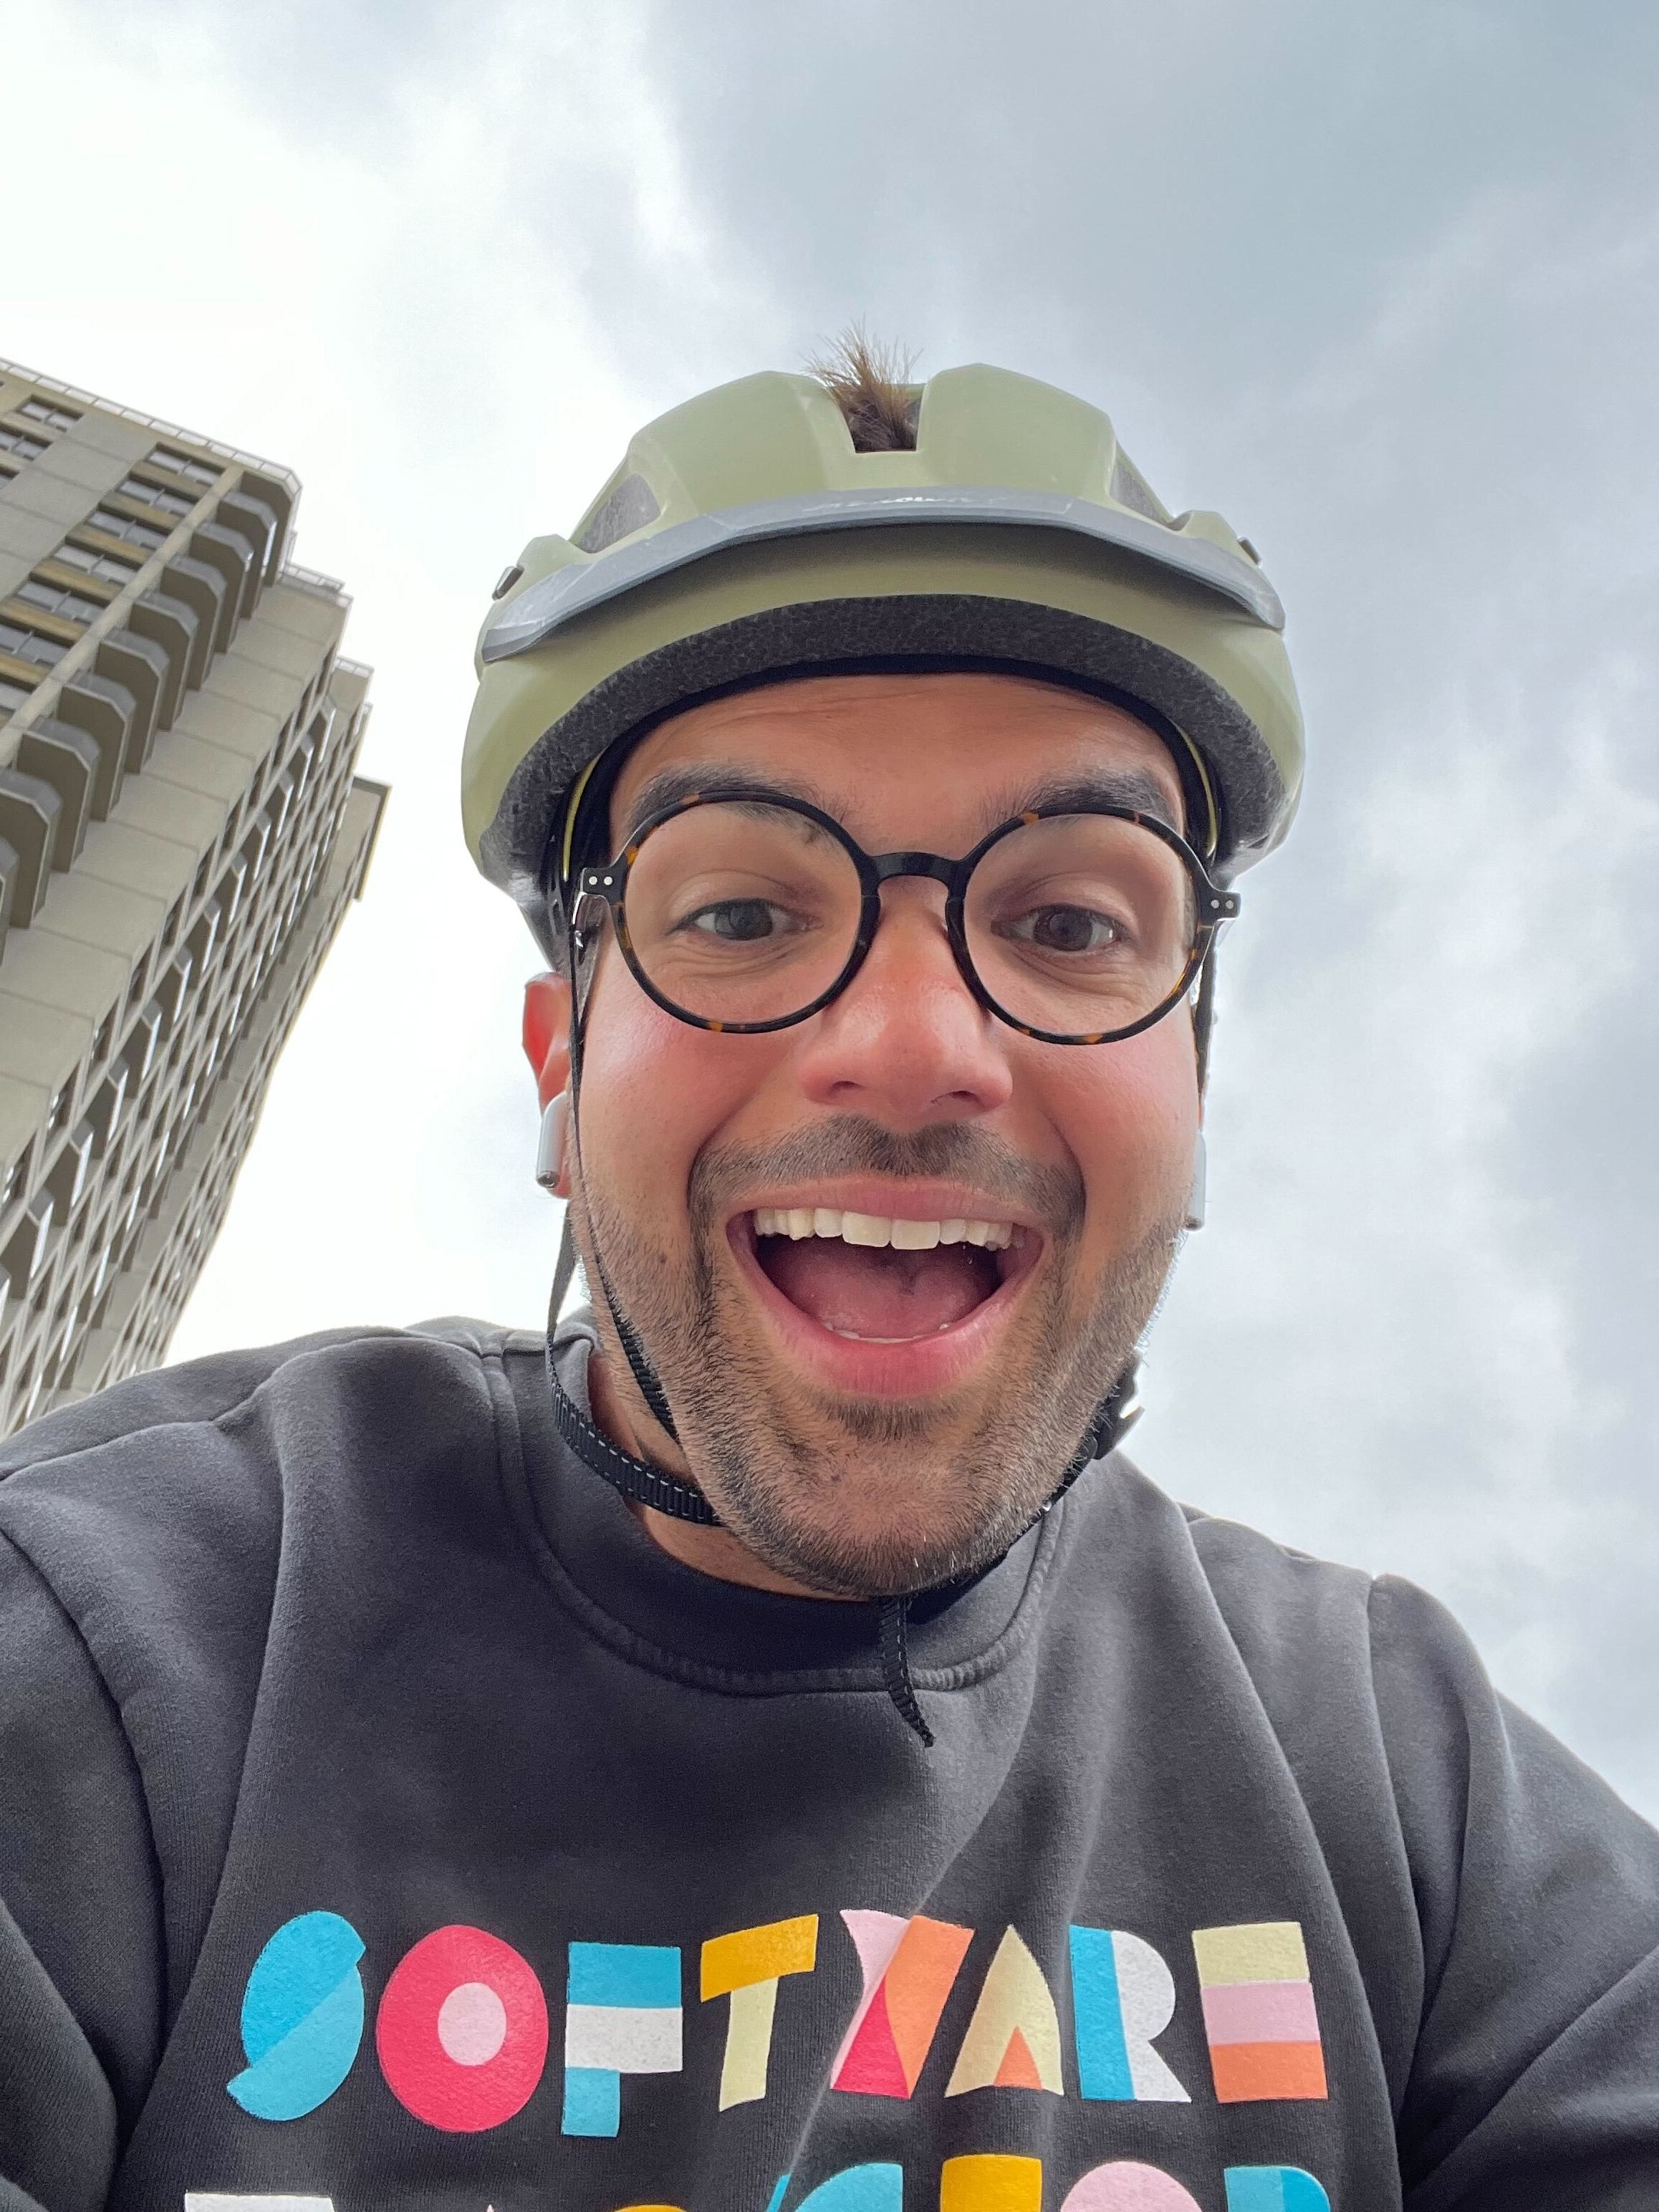 A selfie photo of Jason wearing a helmet riding his bike